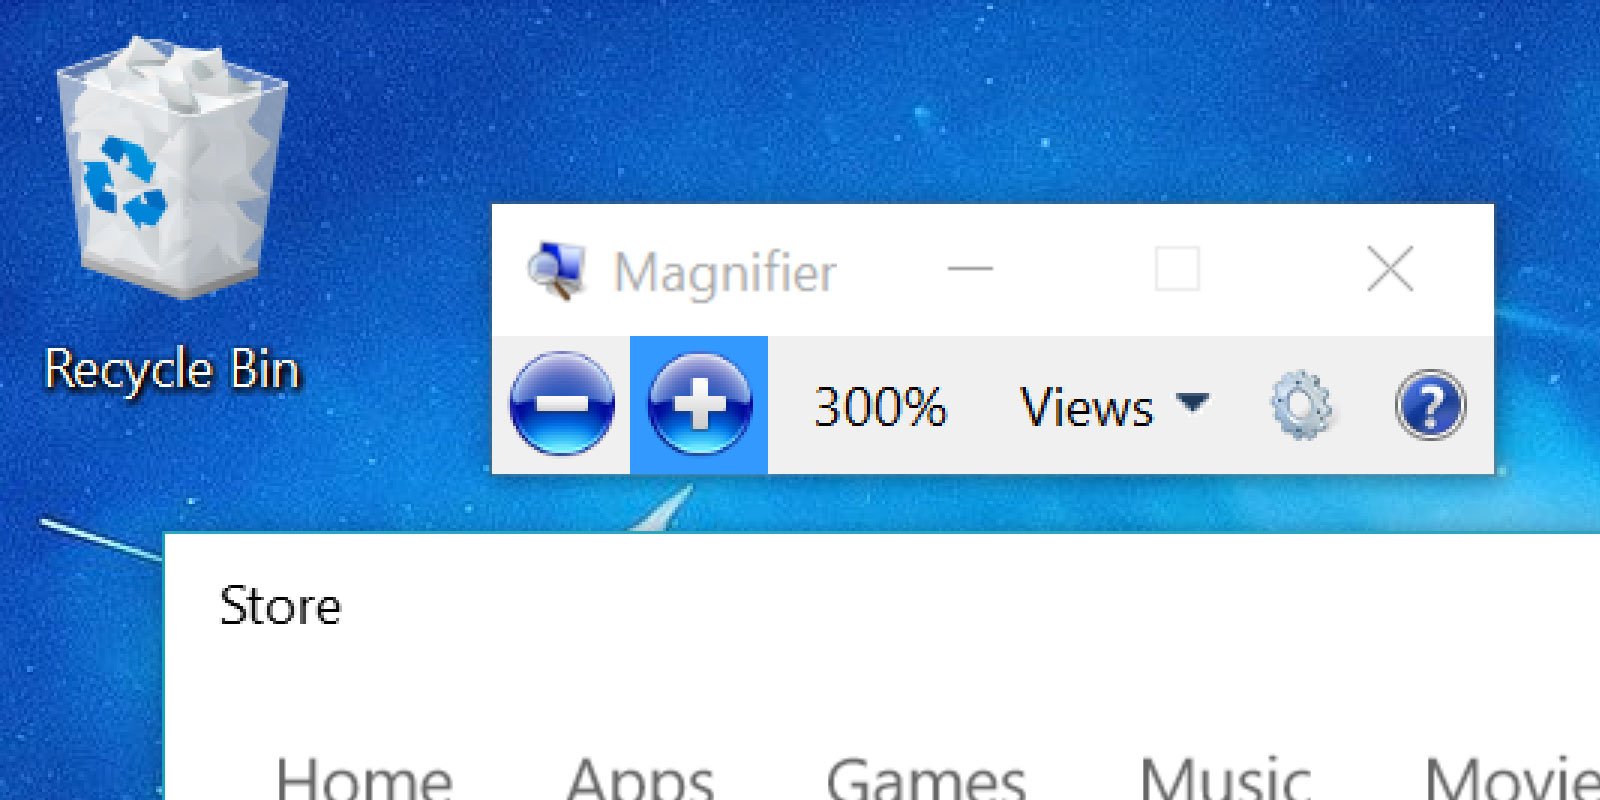 Windows 10 Magnifier